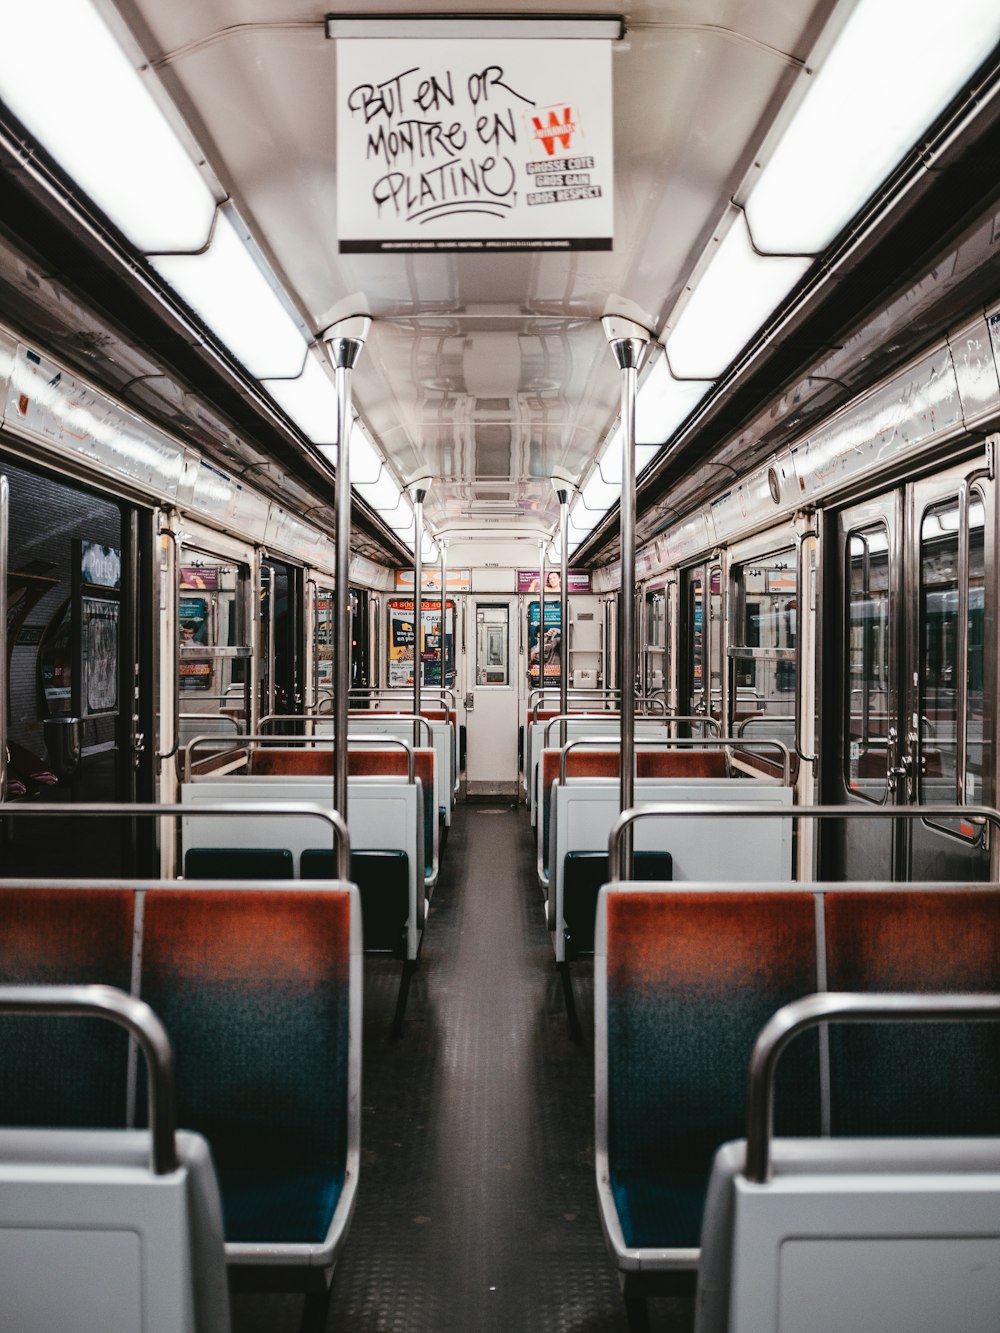 brown and teal subway train seats